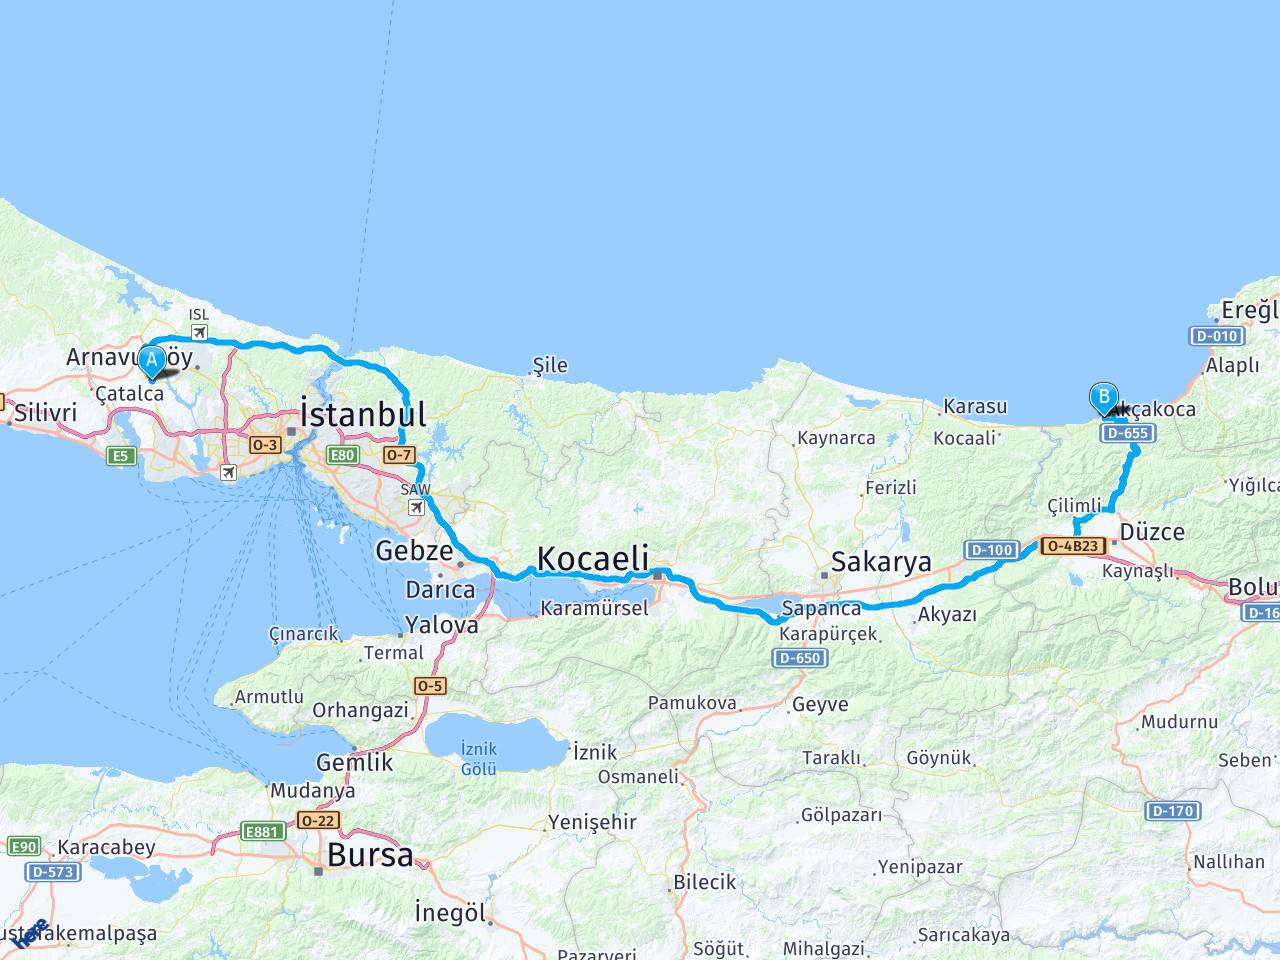 istanbul hadimkoy duzce akcakoca arasi mesafe istanbul hadimkoy duzce akcakoca yol haritasi istanbul hadimkoy duzce akcakoca kac saat kac km